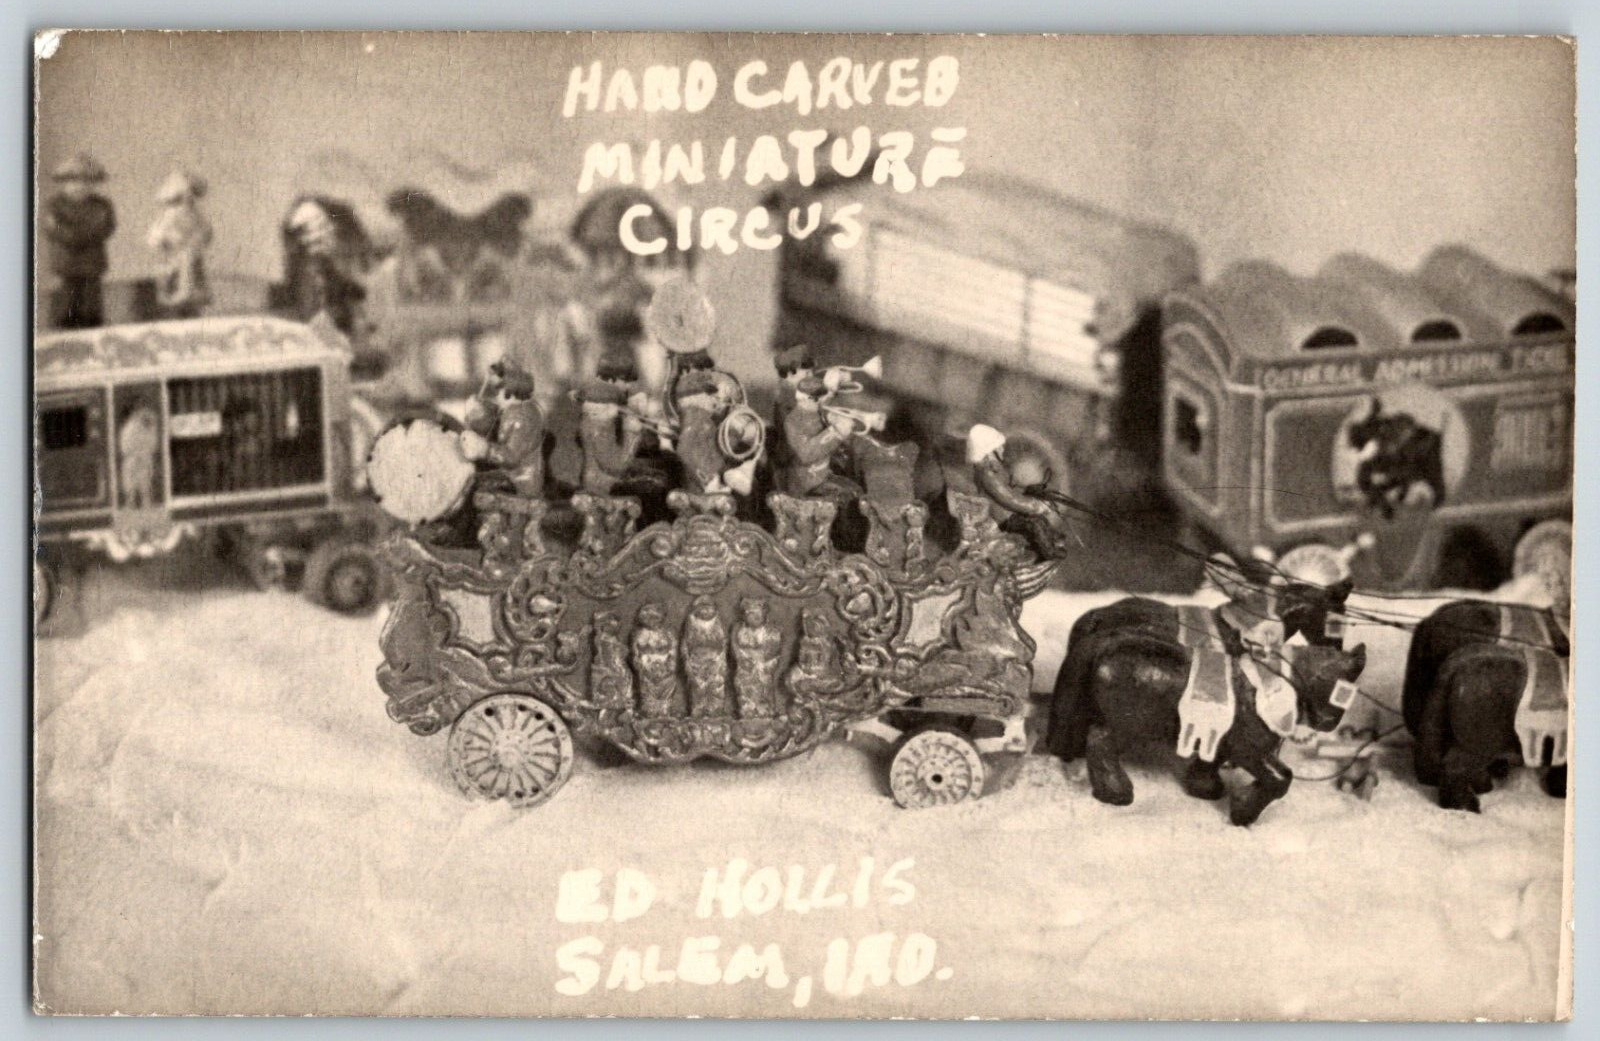 Hand Carved Miniature Circus Ed Hollis Salem IN RPPC* Postcard Scarce c1939-50